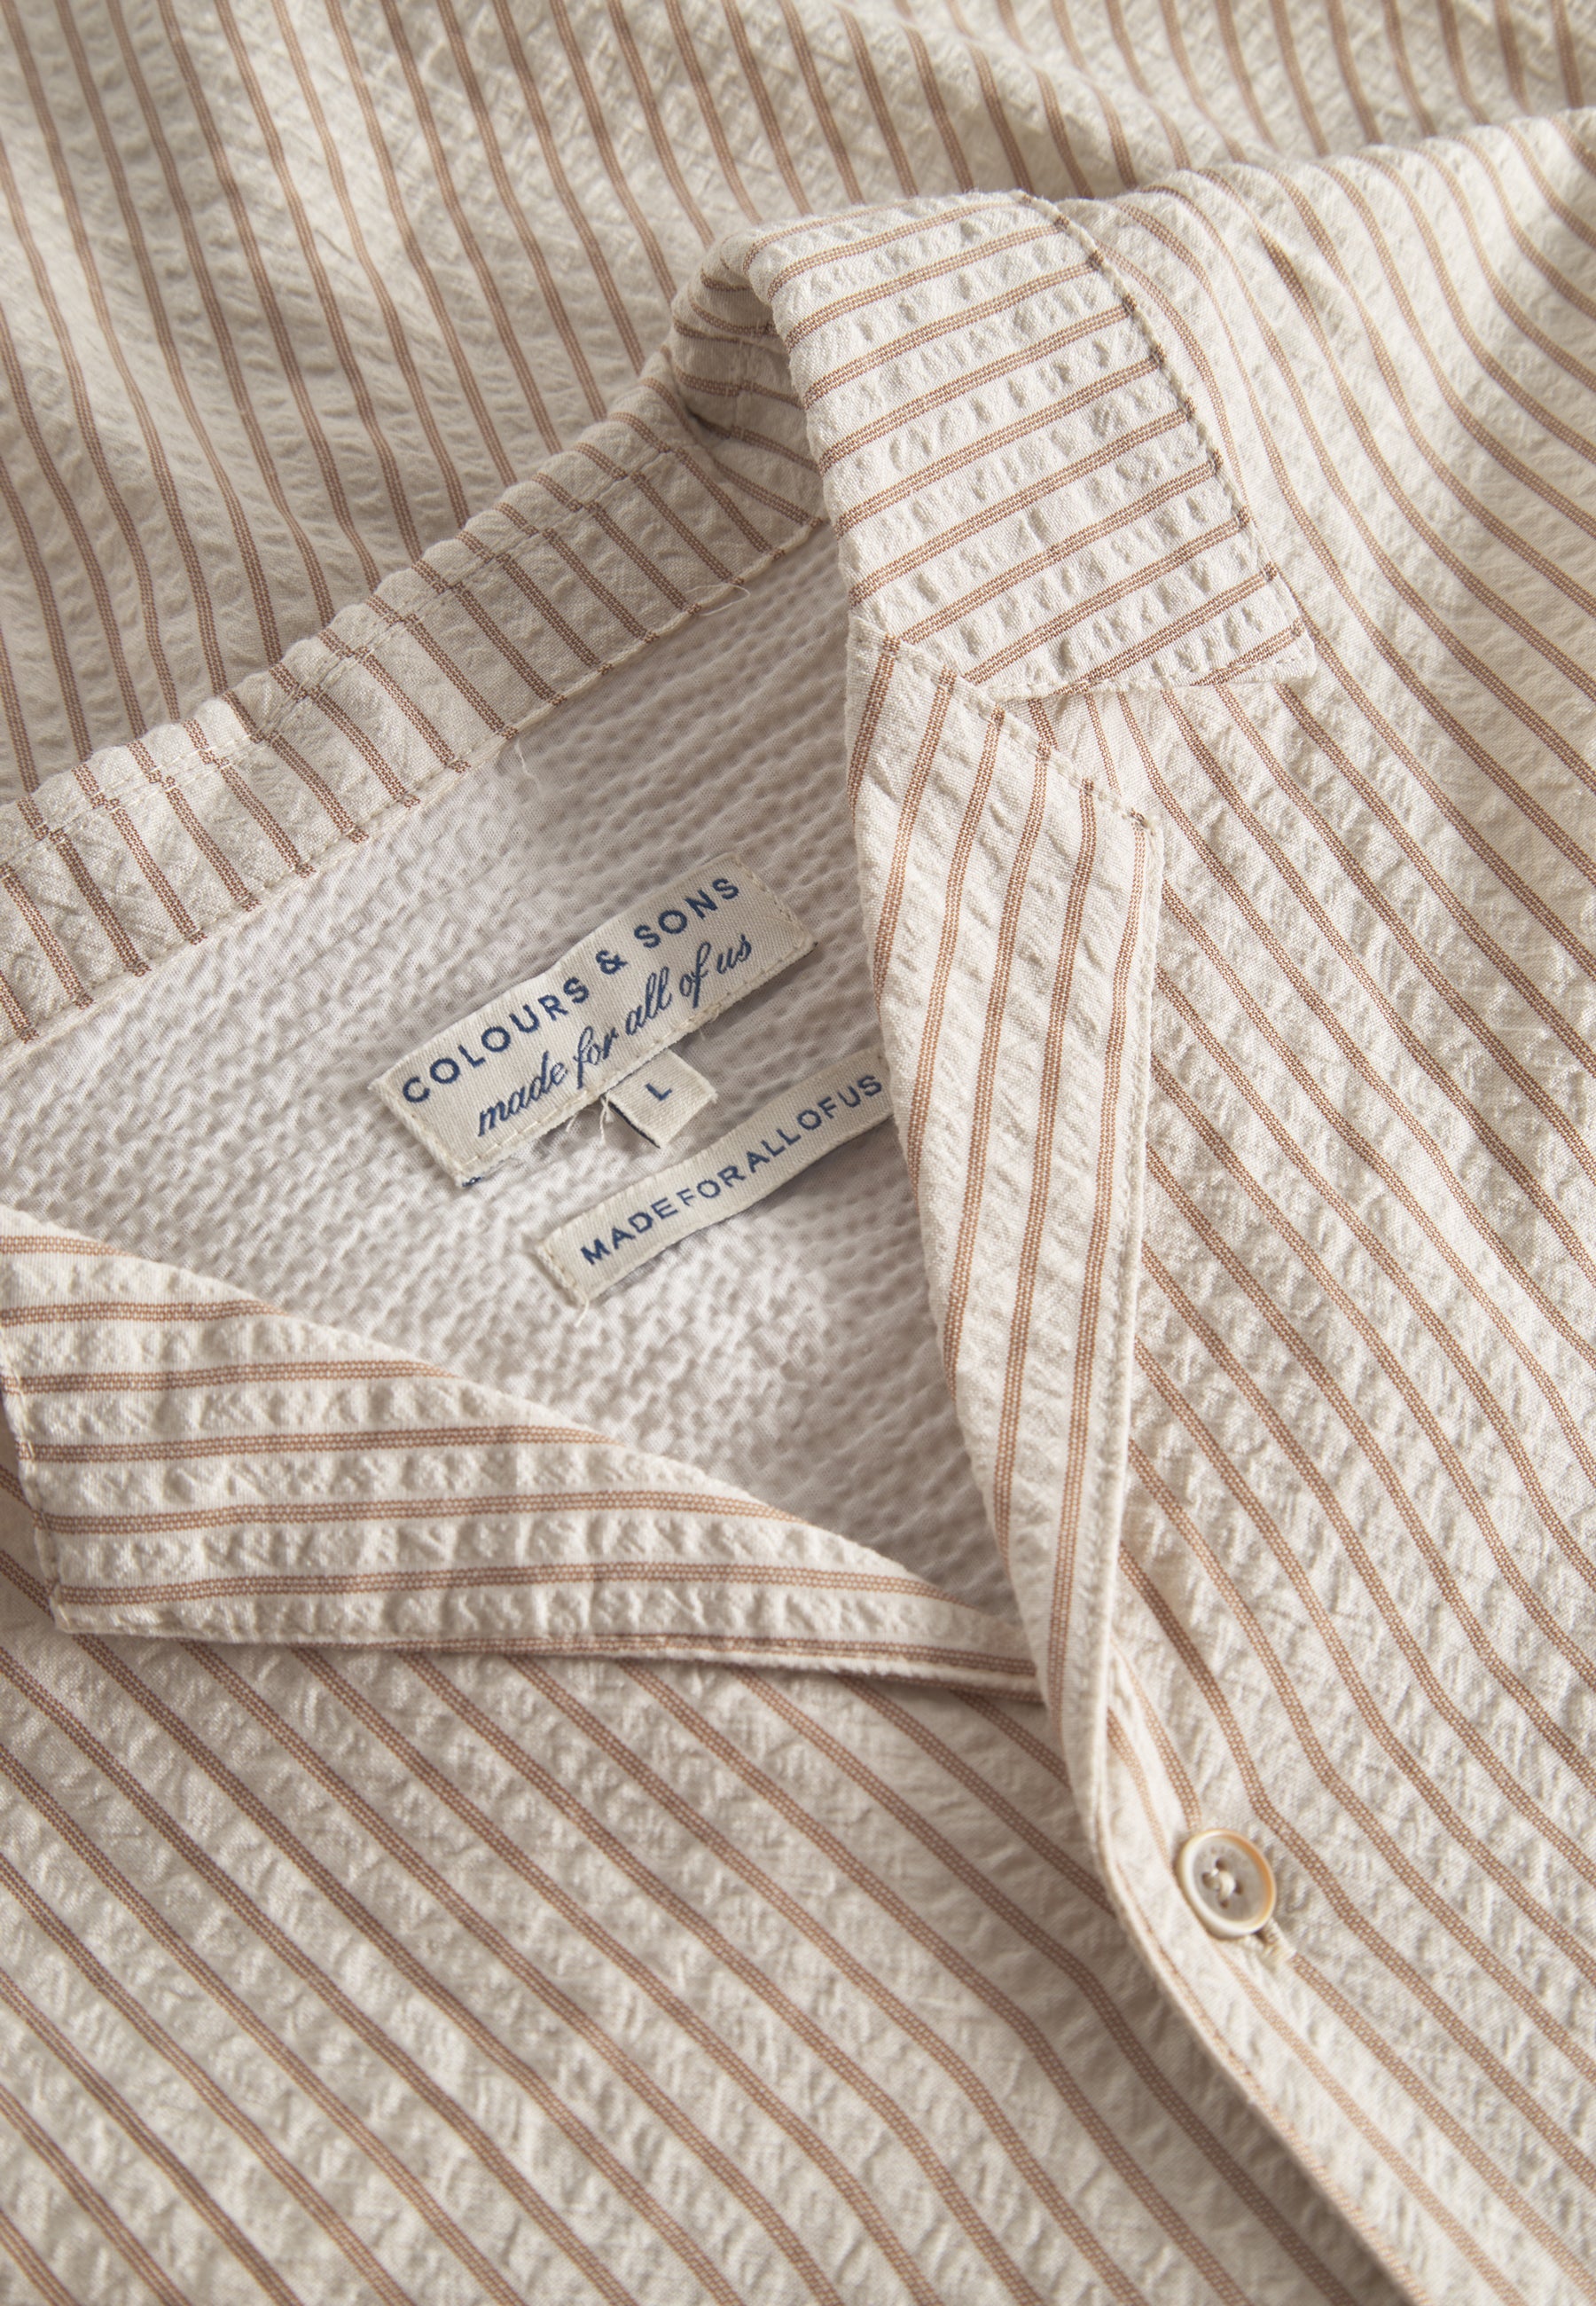 Shirt-Seersucker Striped in Sienna Stripes Hemden Colours and Sons   